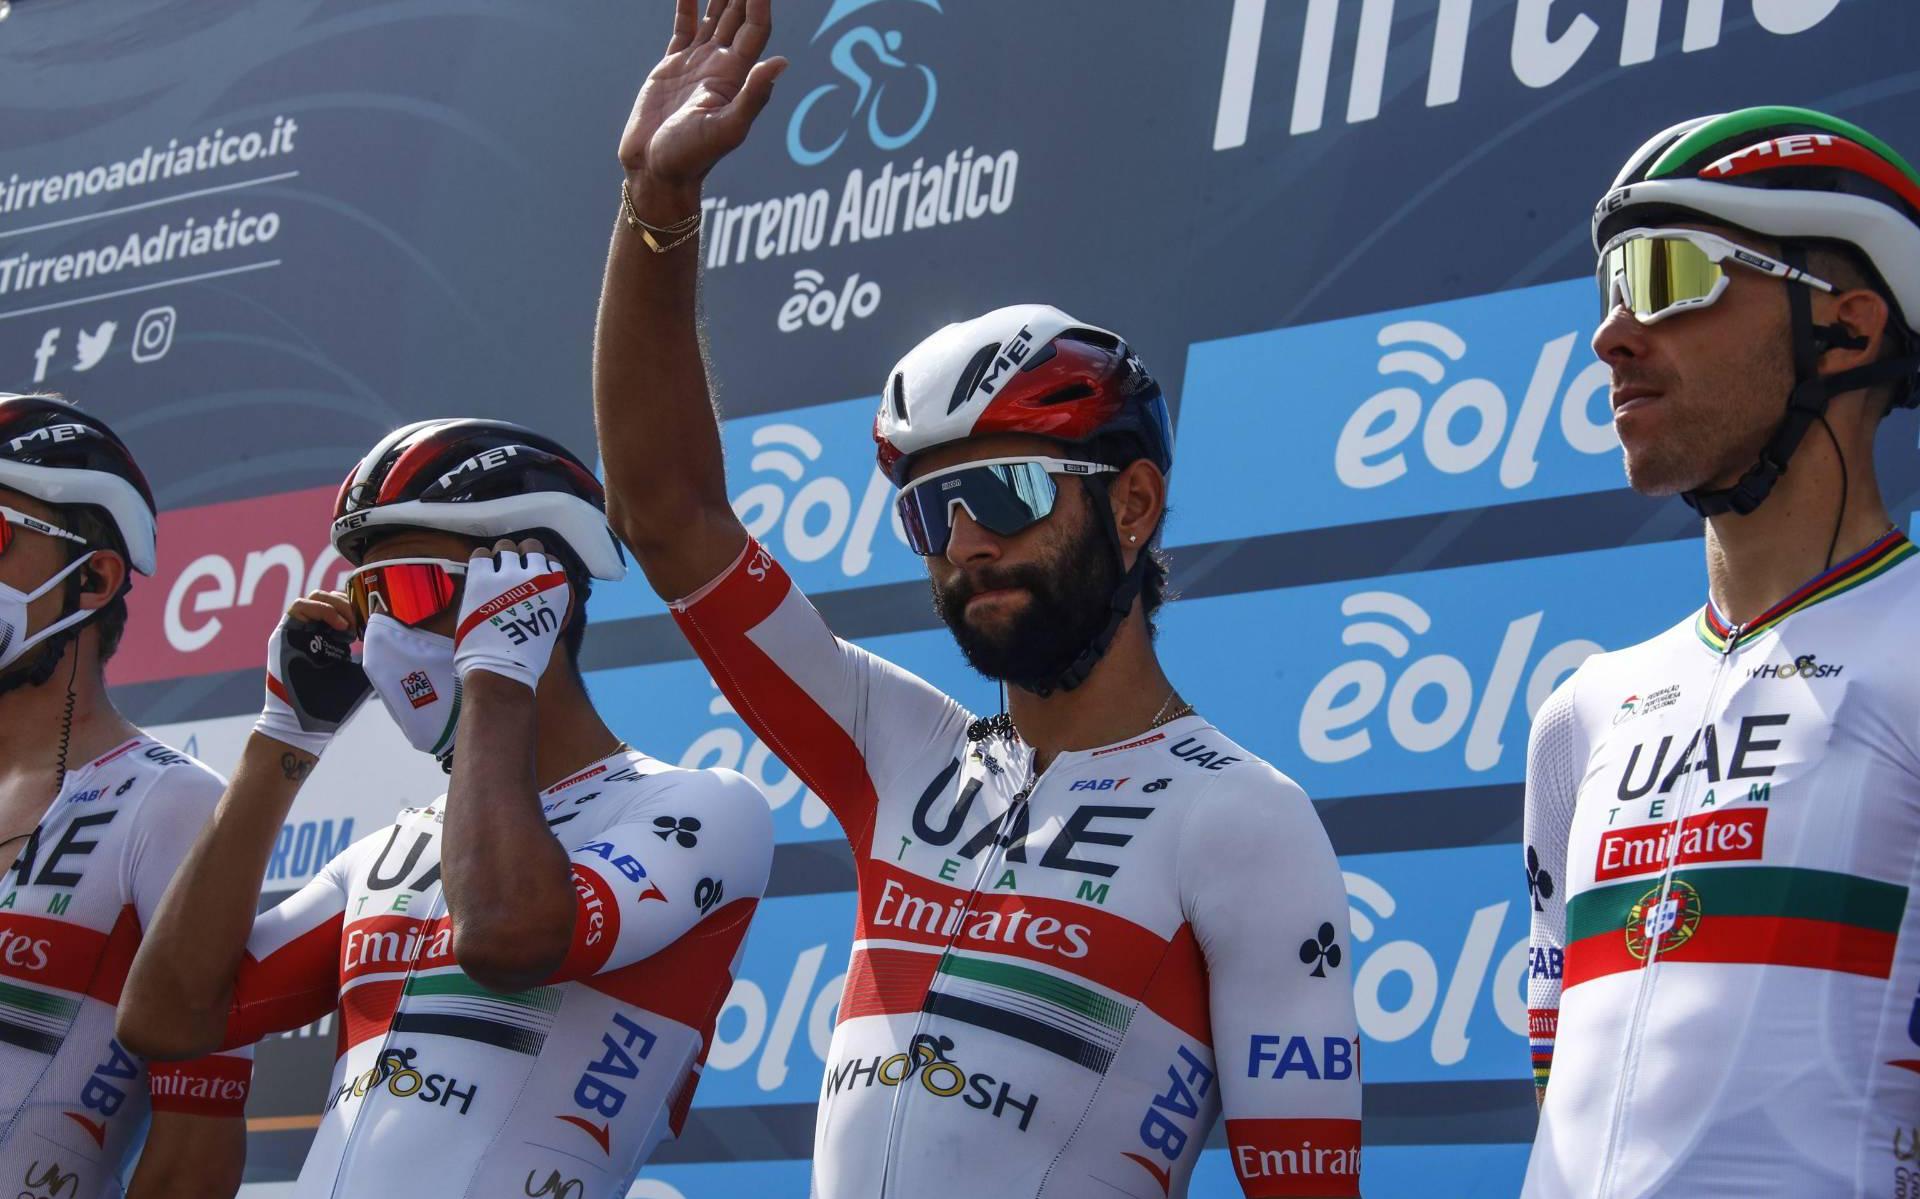 Wielerteam Emirates schuift Gaviria naar voren in Giro